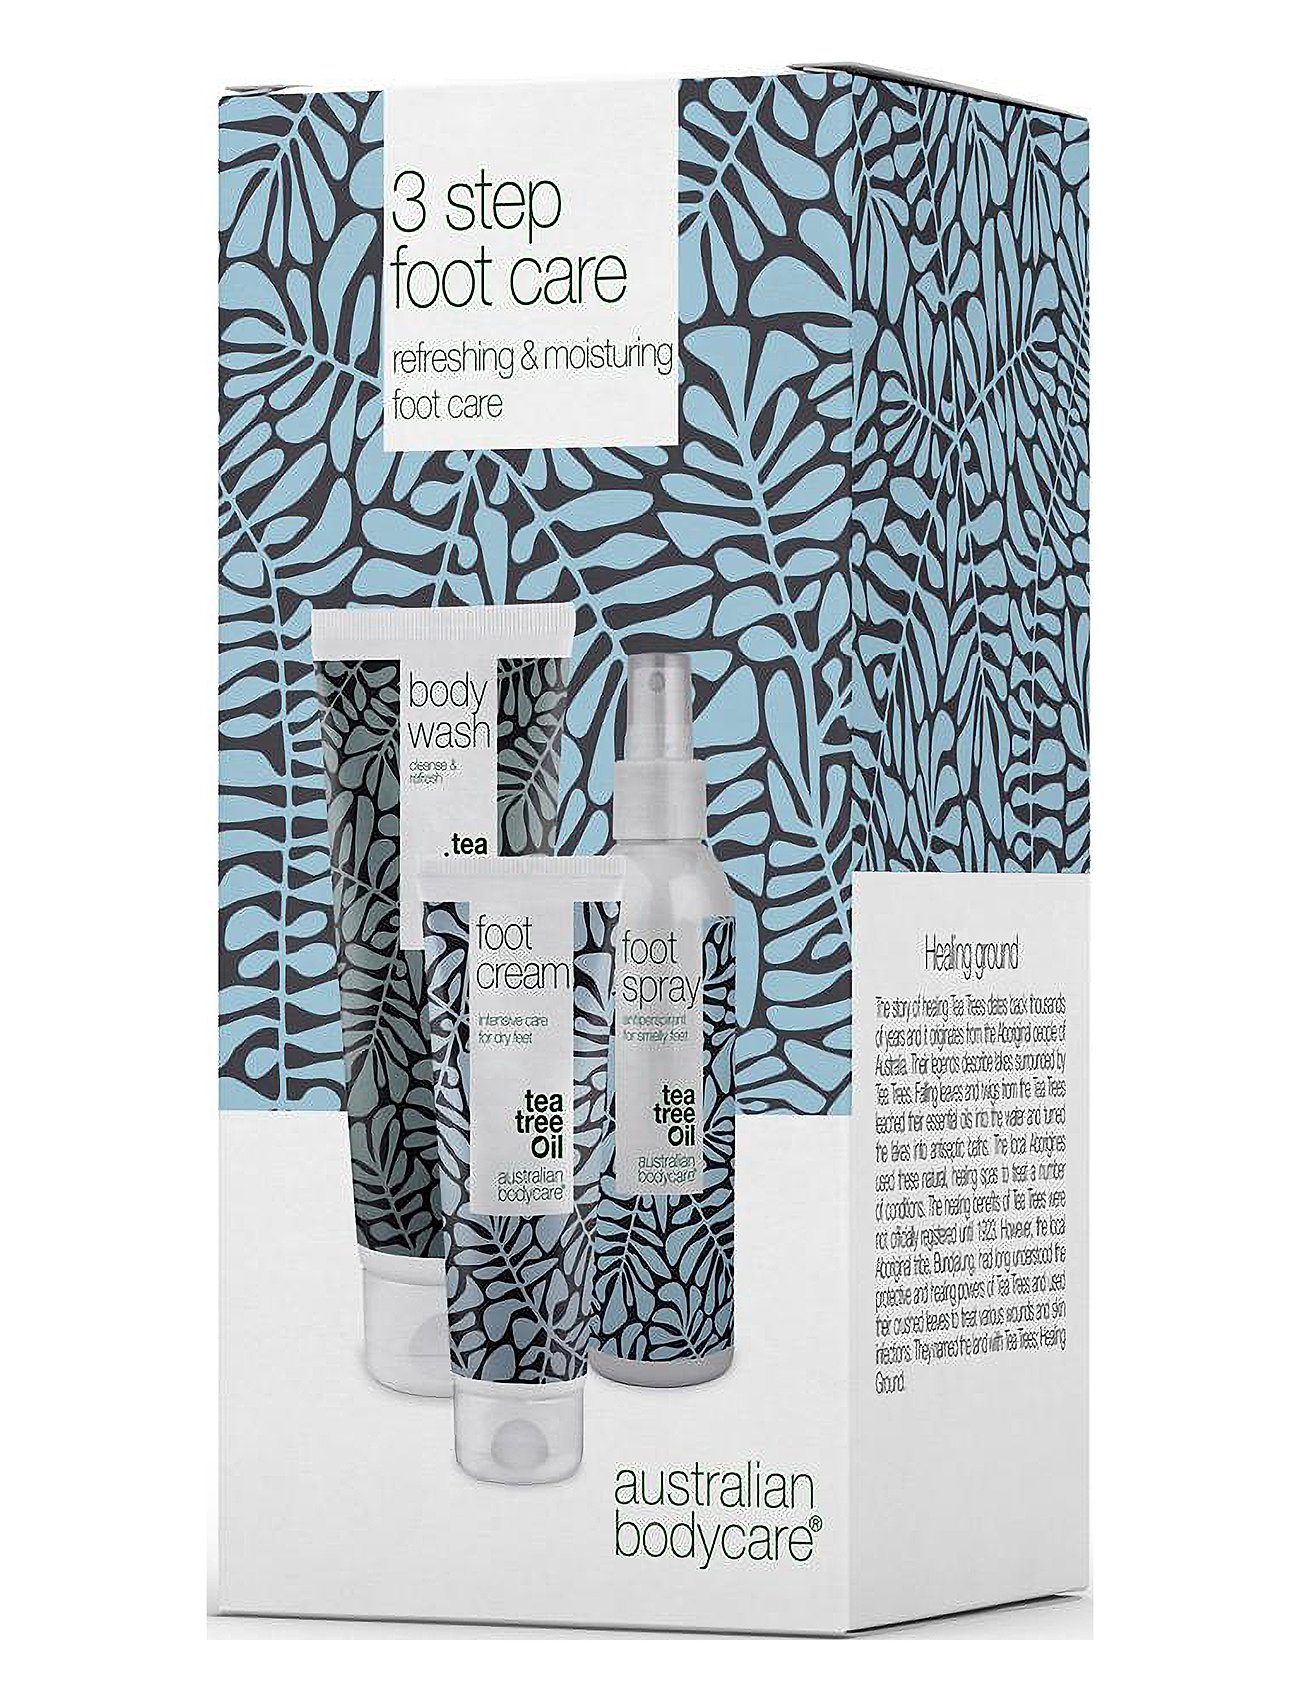 3 Step Foot Care - Refreshing & Moisturing Foot Care Beauty Men Skin Care Body Foot Cream Nude Australian Bodycare